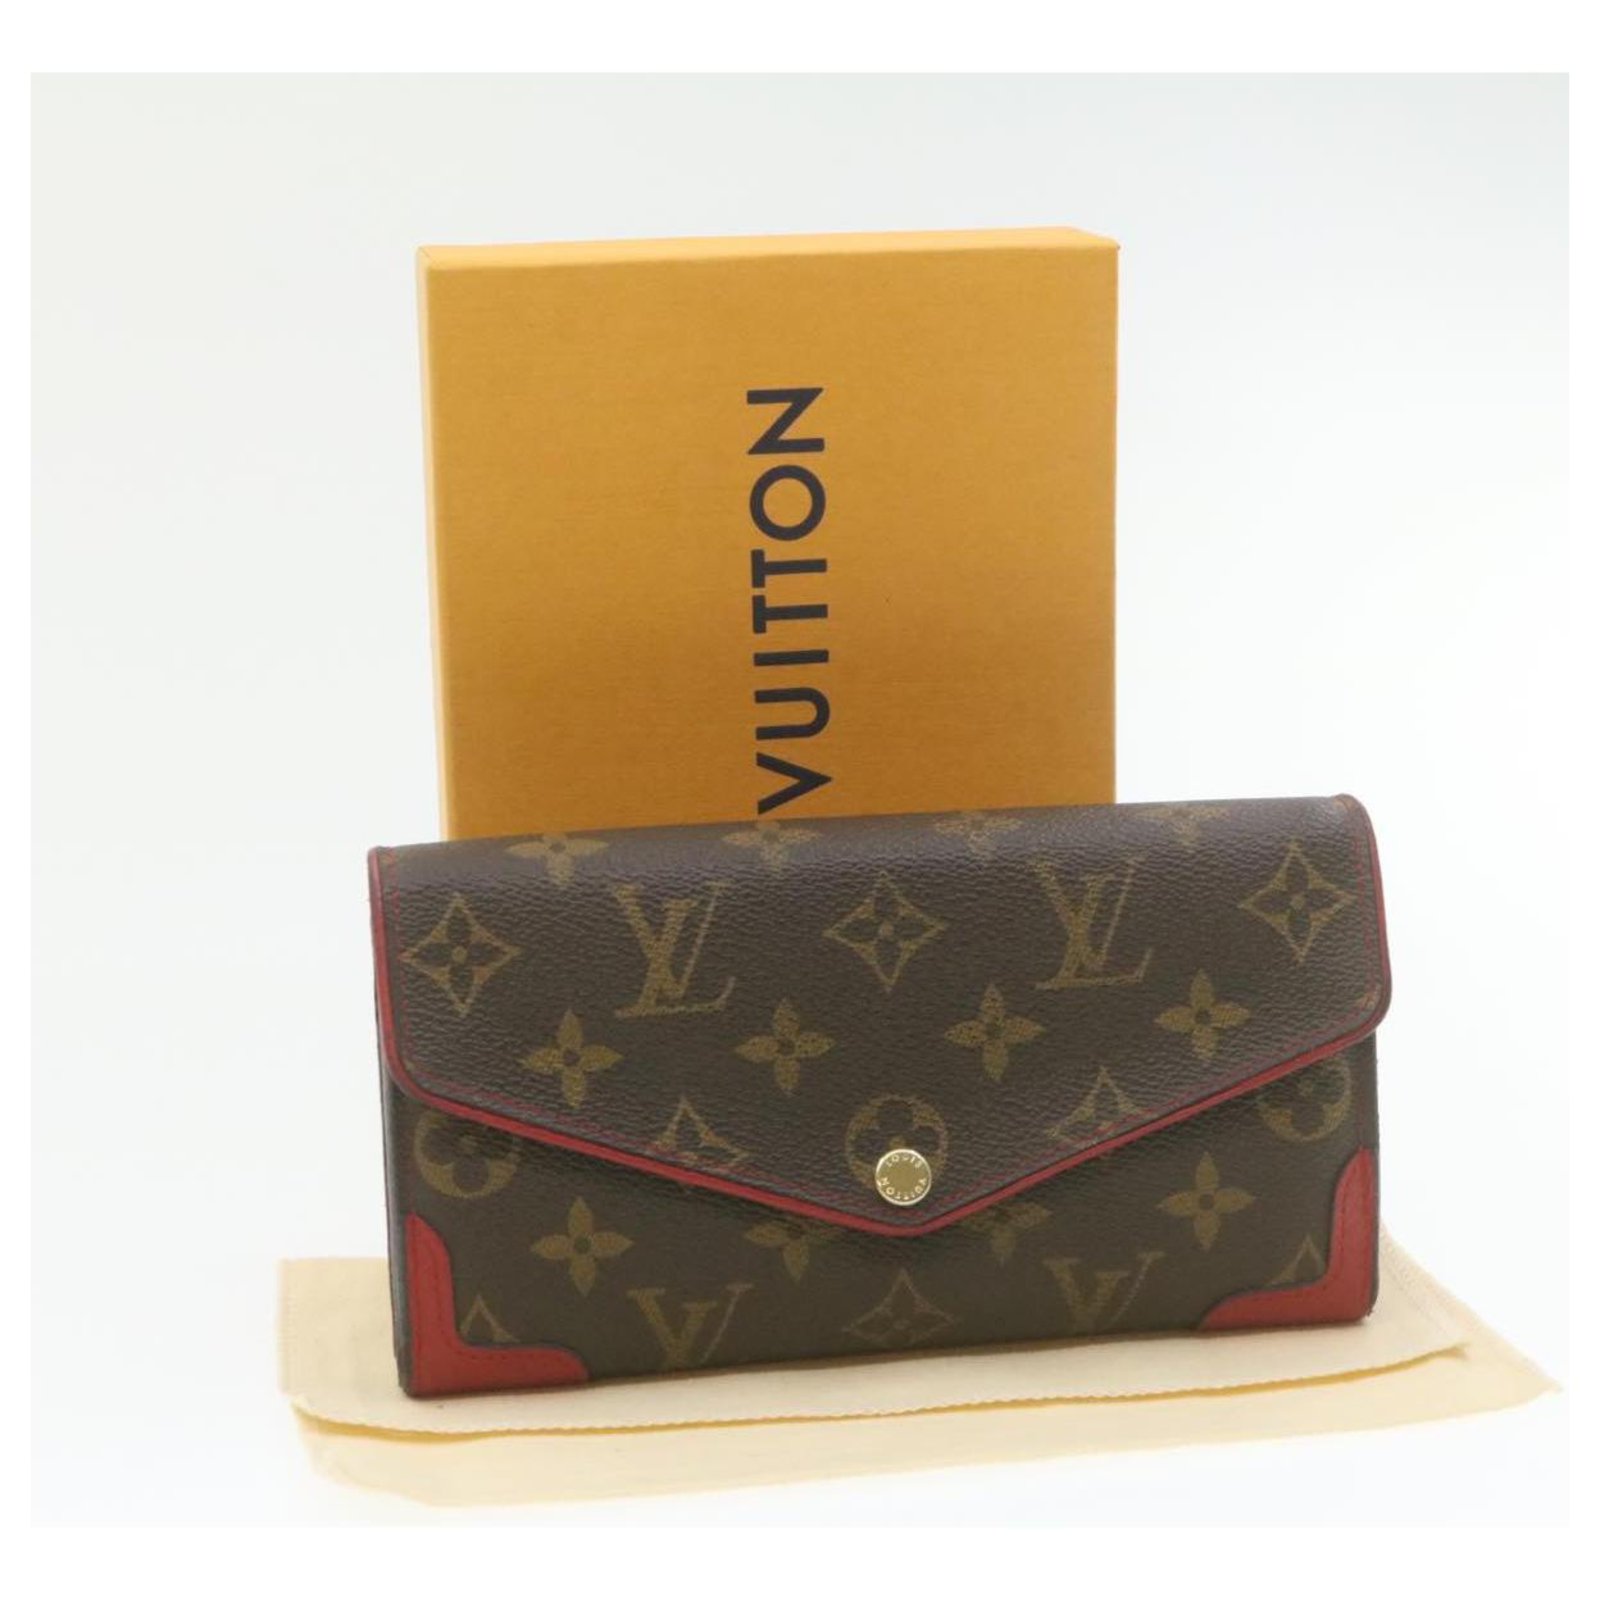 Louis Vuitton PORTEFEUILLE SARAH Sarah wallet retiro (M61184)